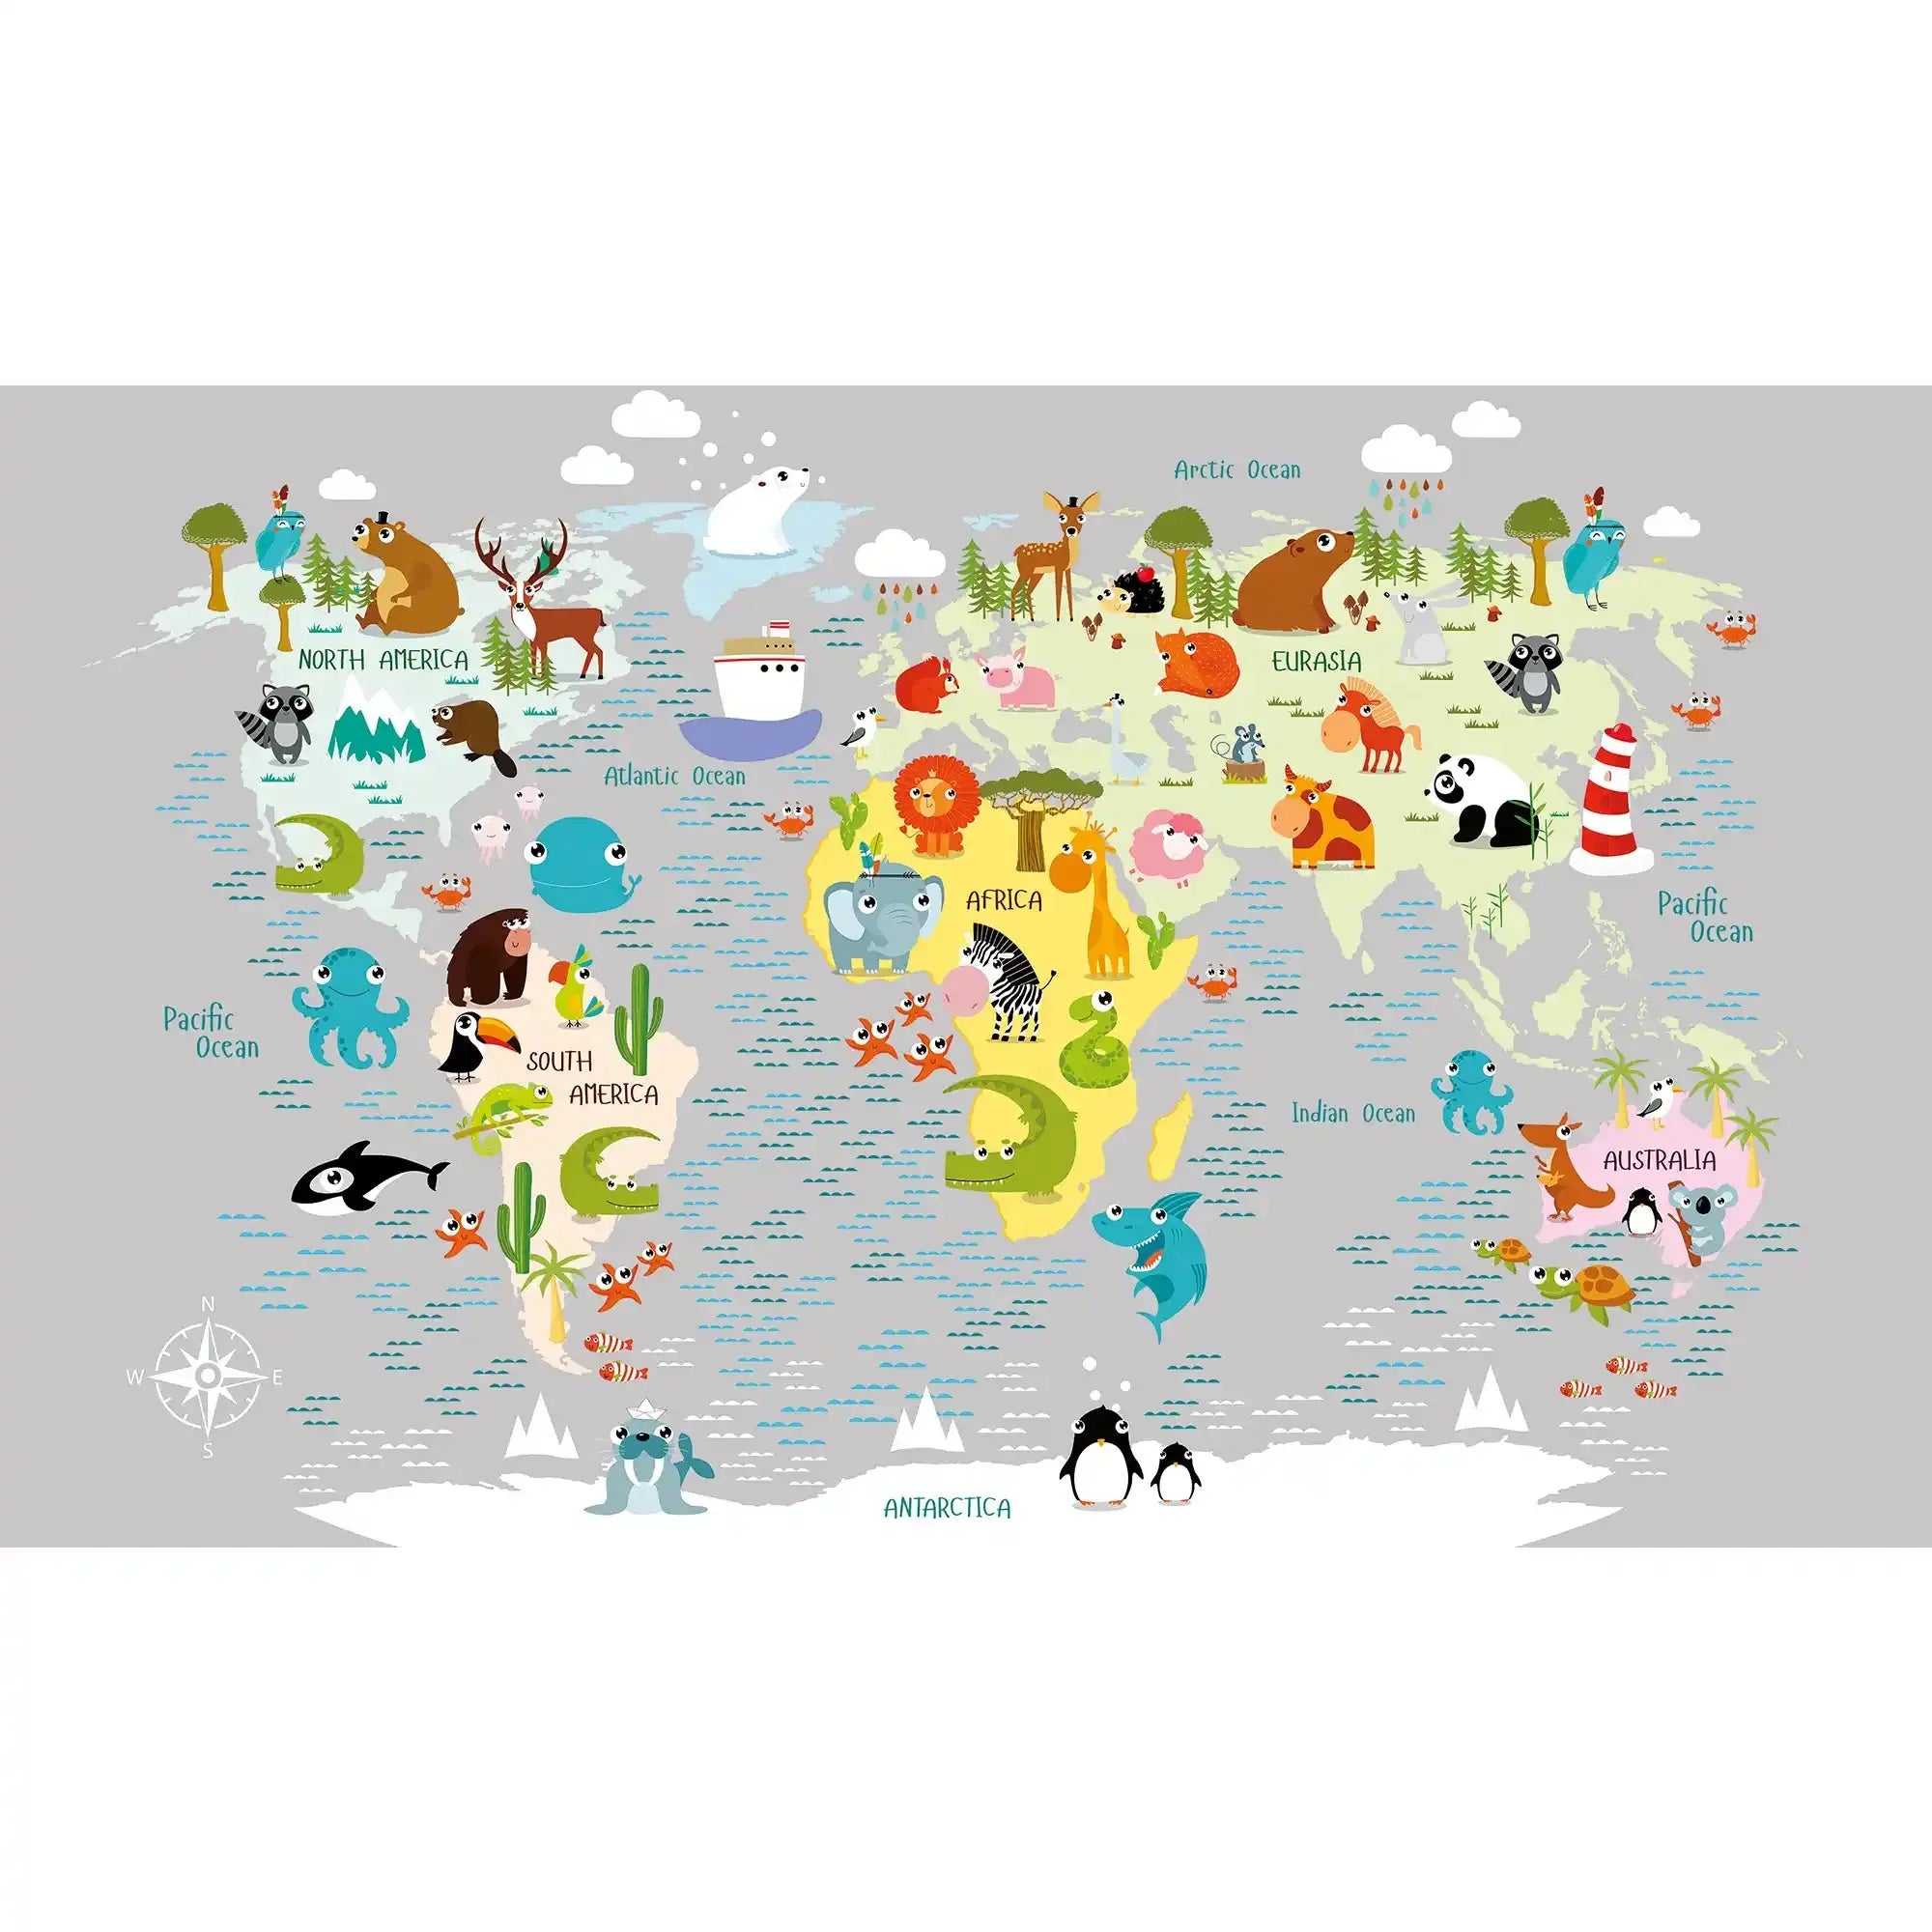 6002 / World Map Animal Mural - Peel and Stick Wallpaper for Kids Room and Nursery Decor - Artevella